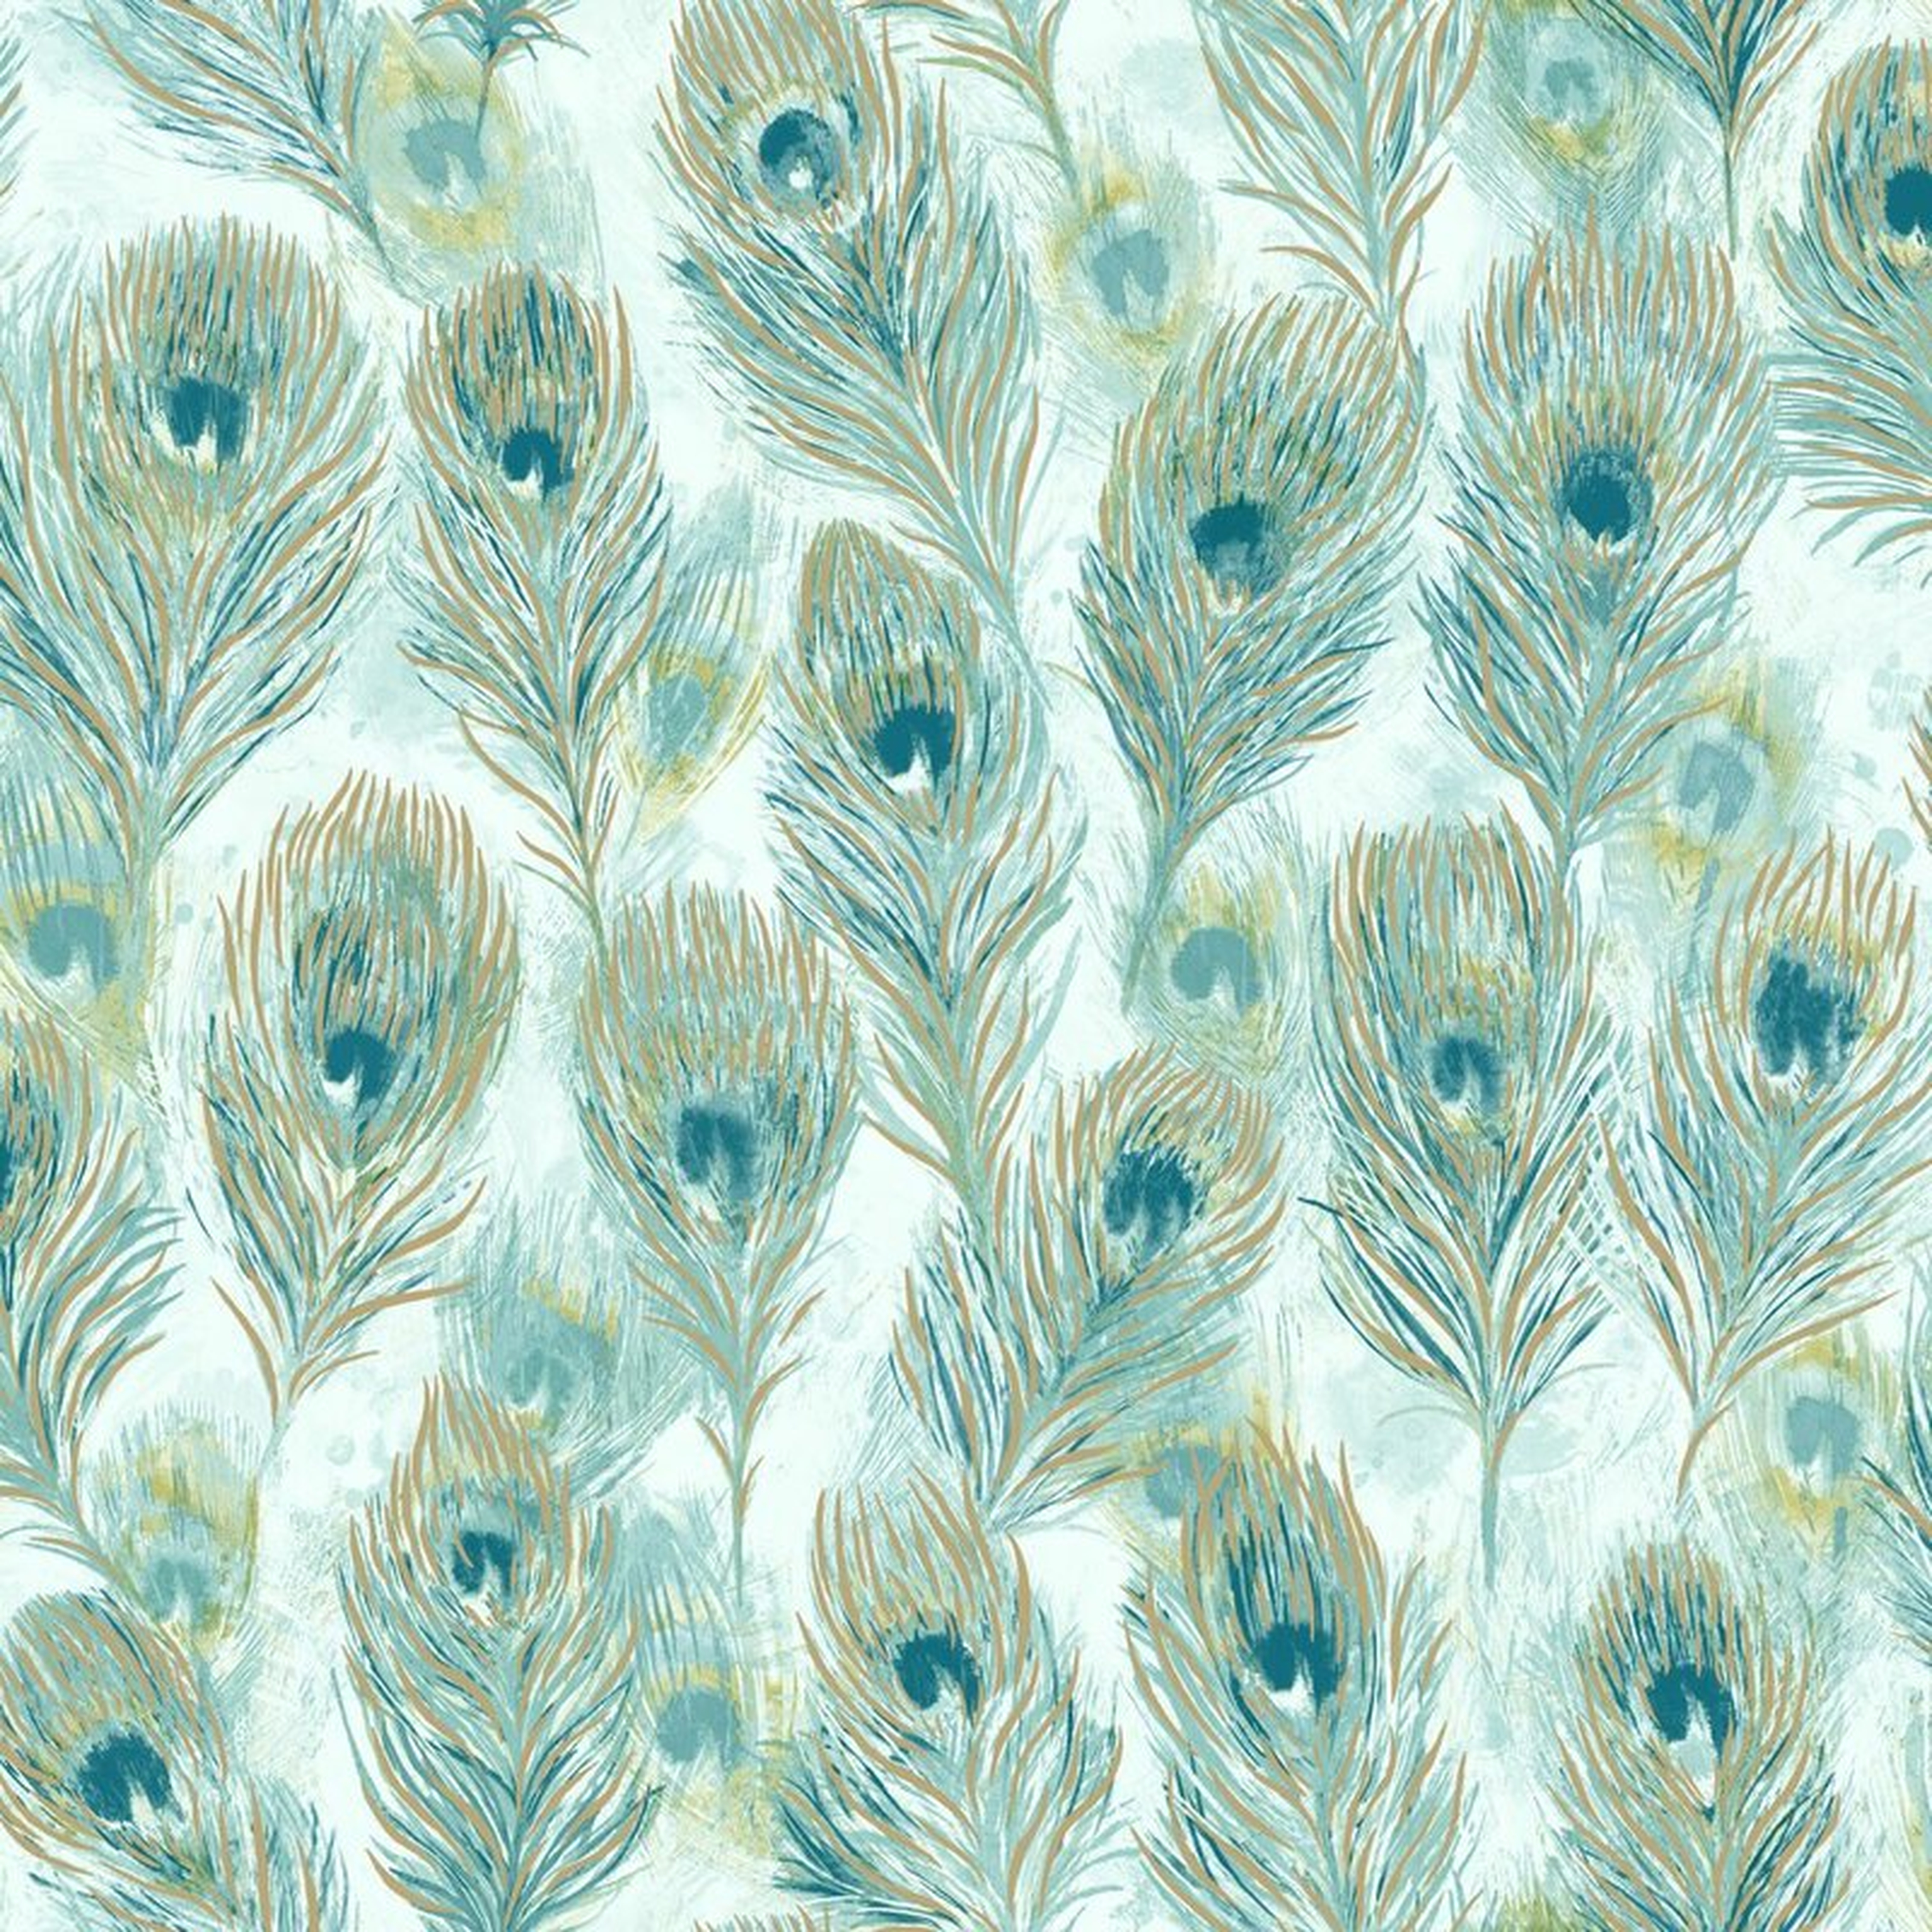 Peacock Feathers 33' L x 21" W Wallpaper Roll - Wayfair